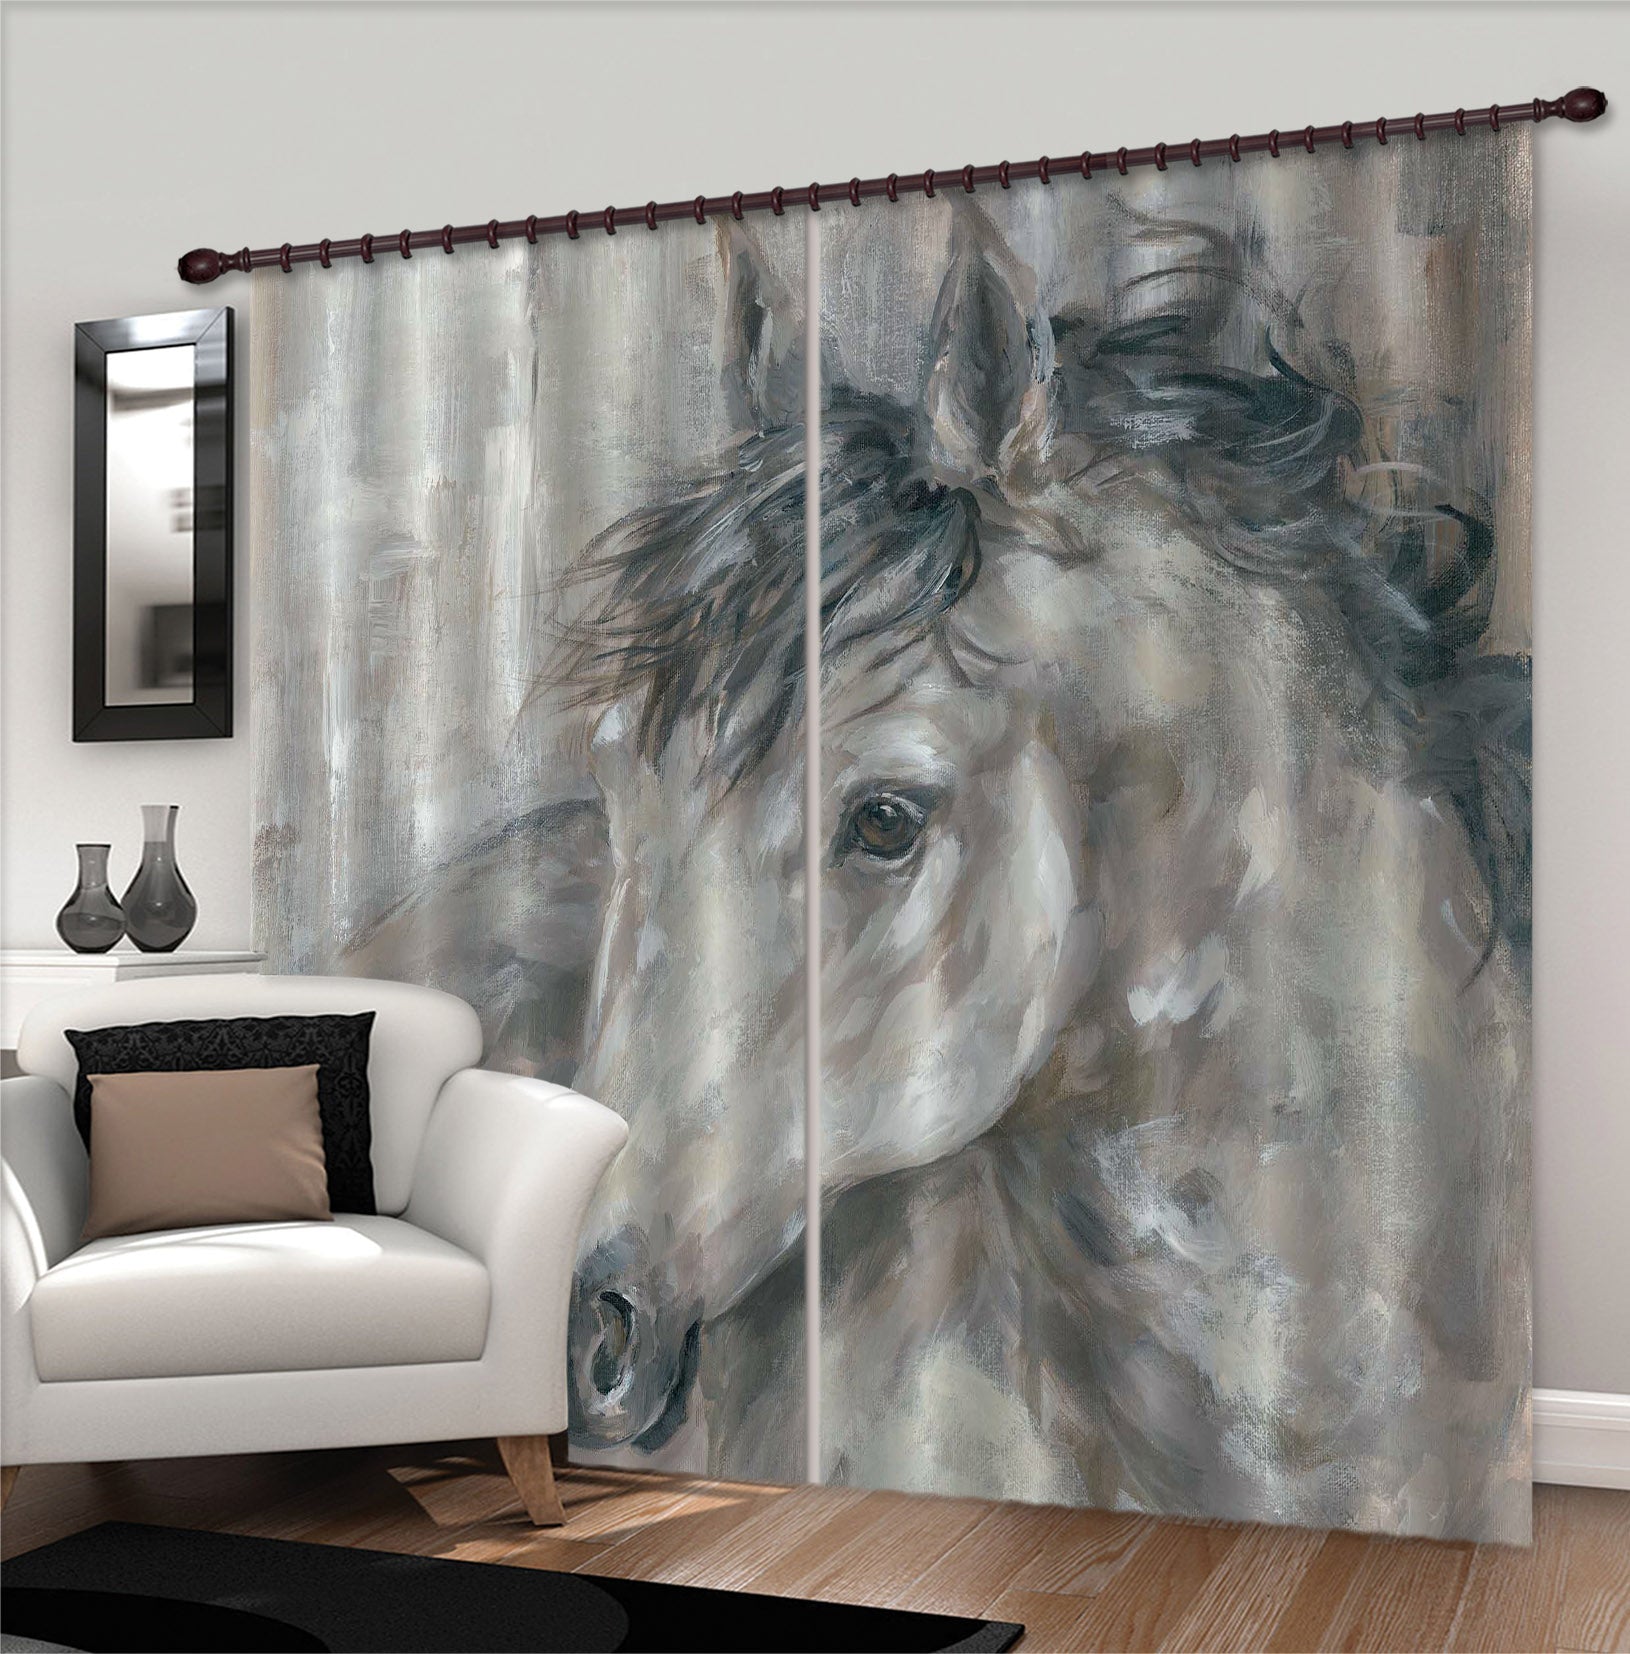 3D Horses Pattern 3086 Debi Coules Curtain Curtains Drapes